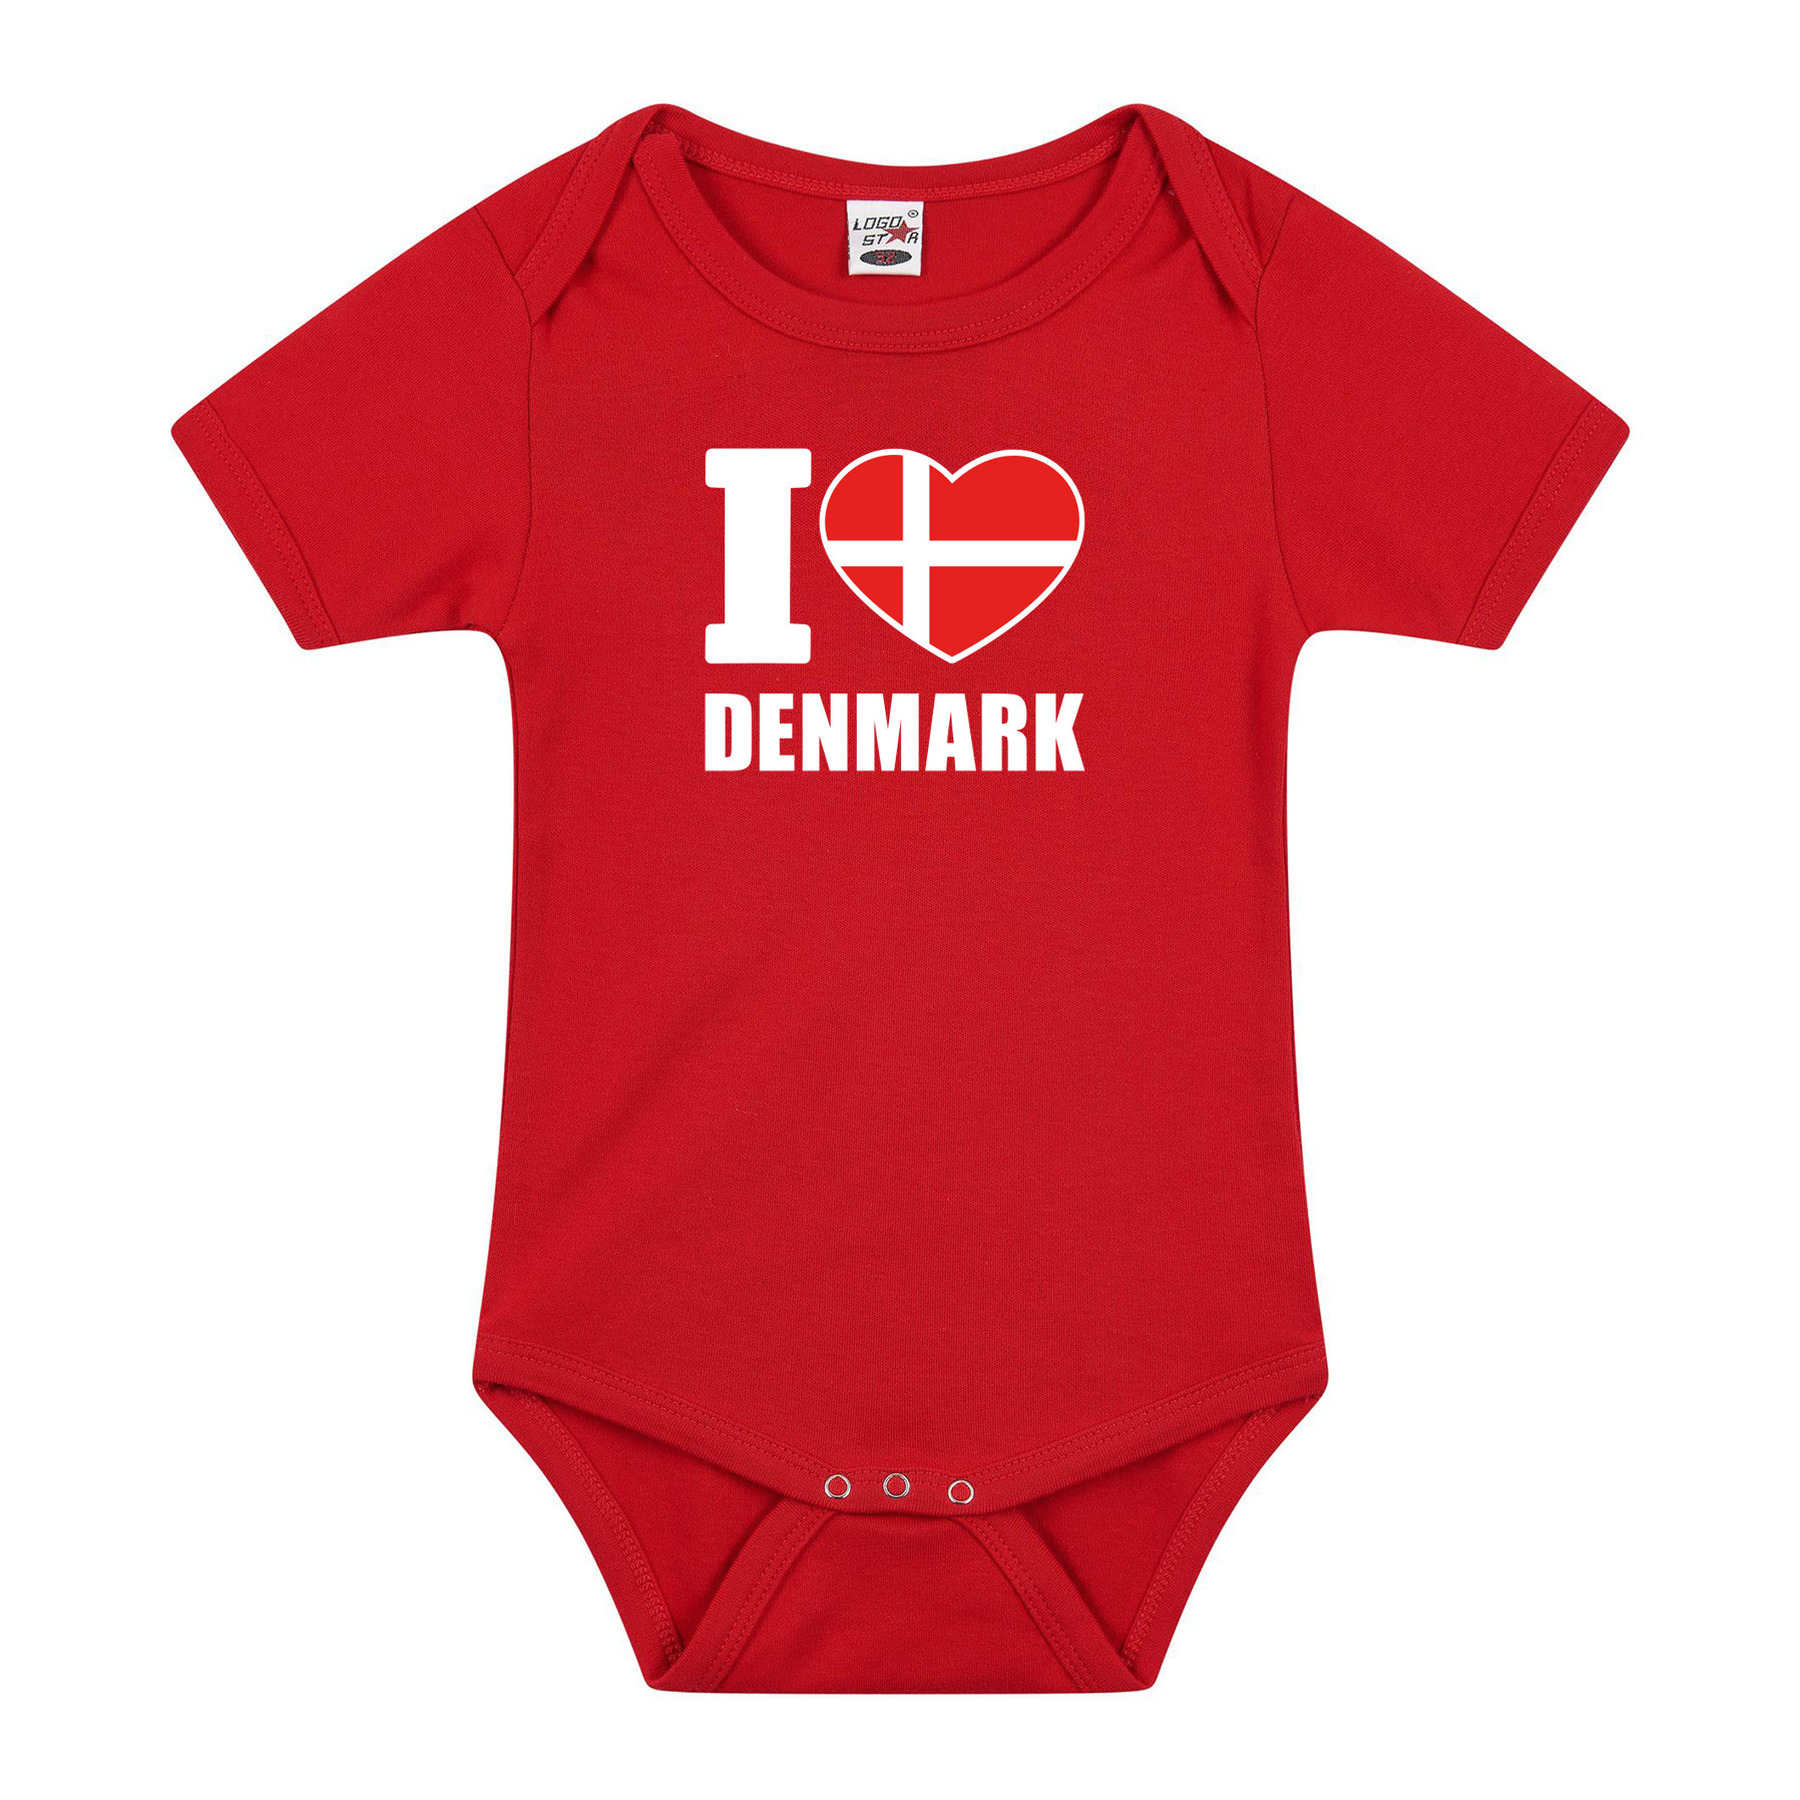 I love Denmark baby rompertje rood Denemarken jongen-meisje